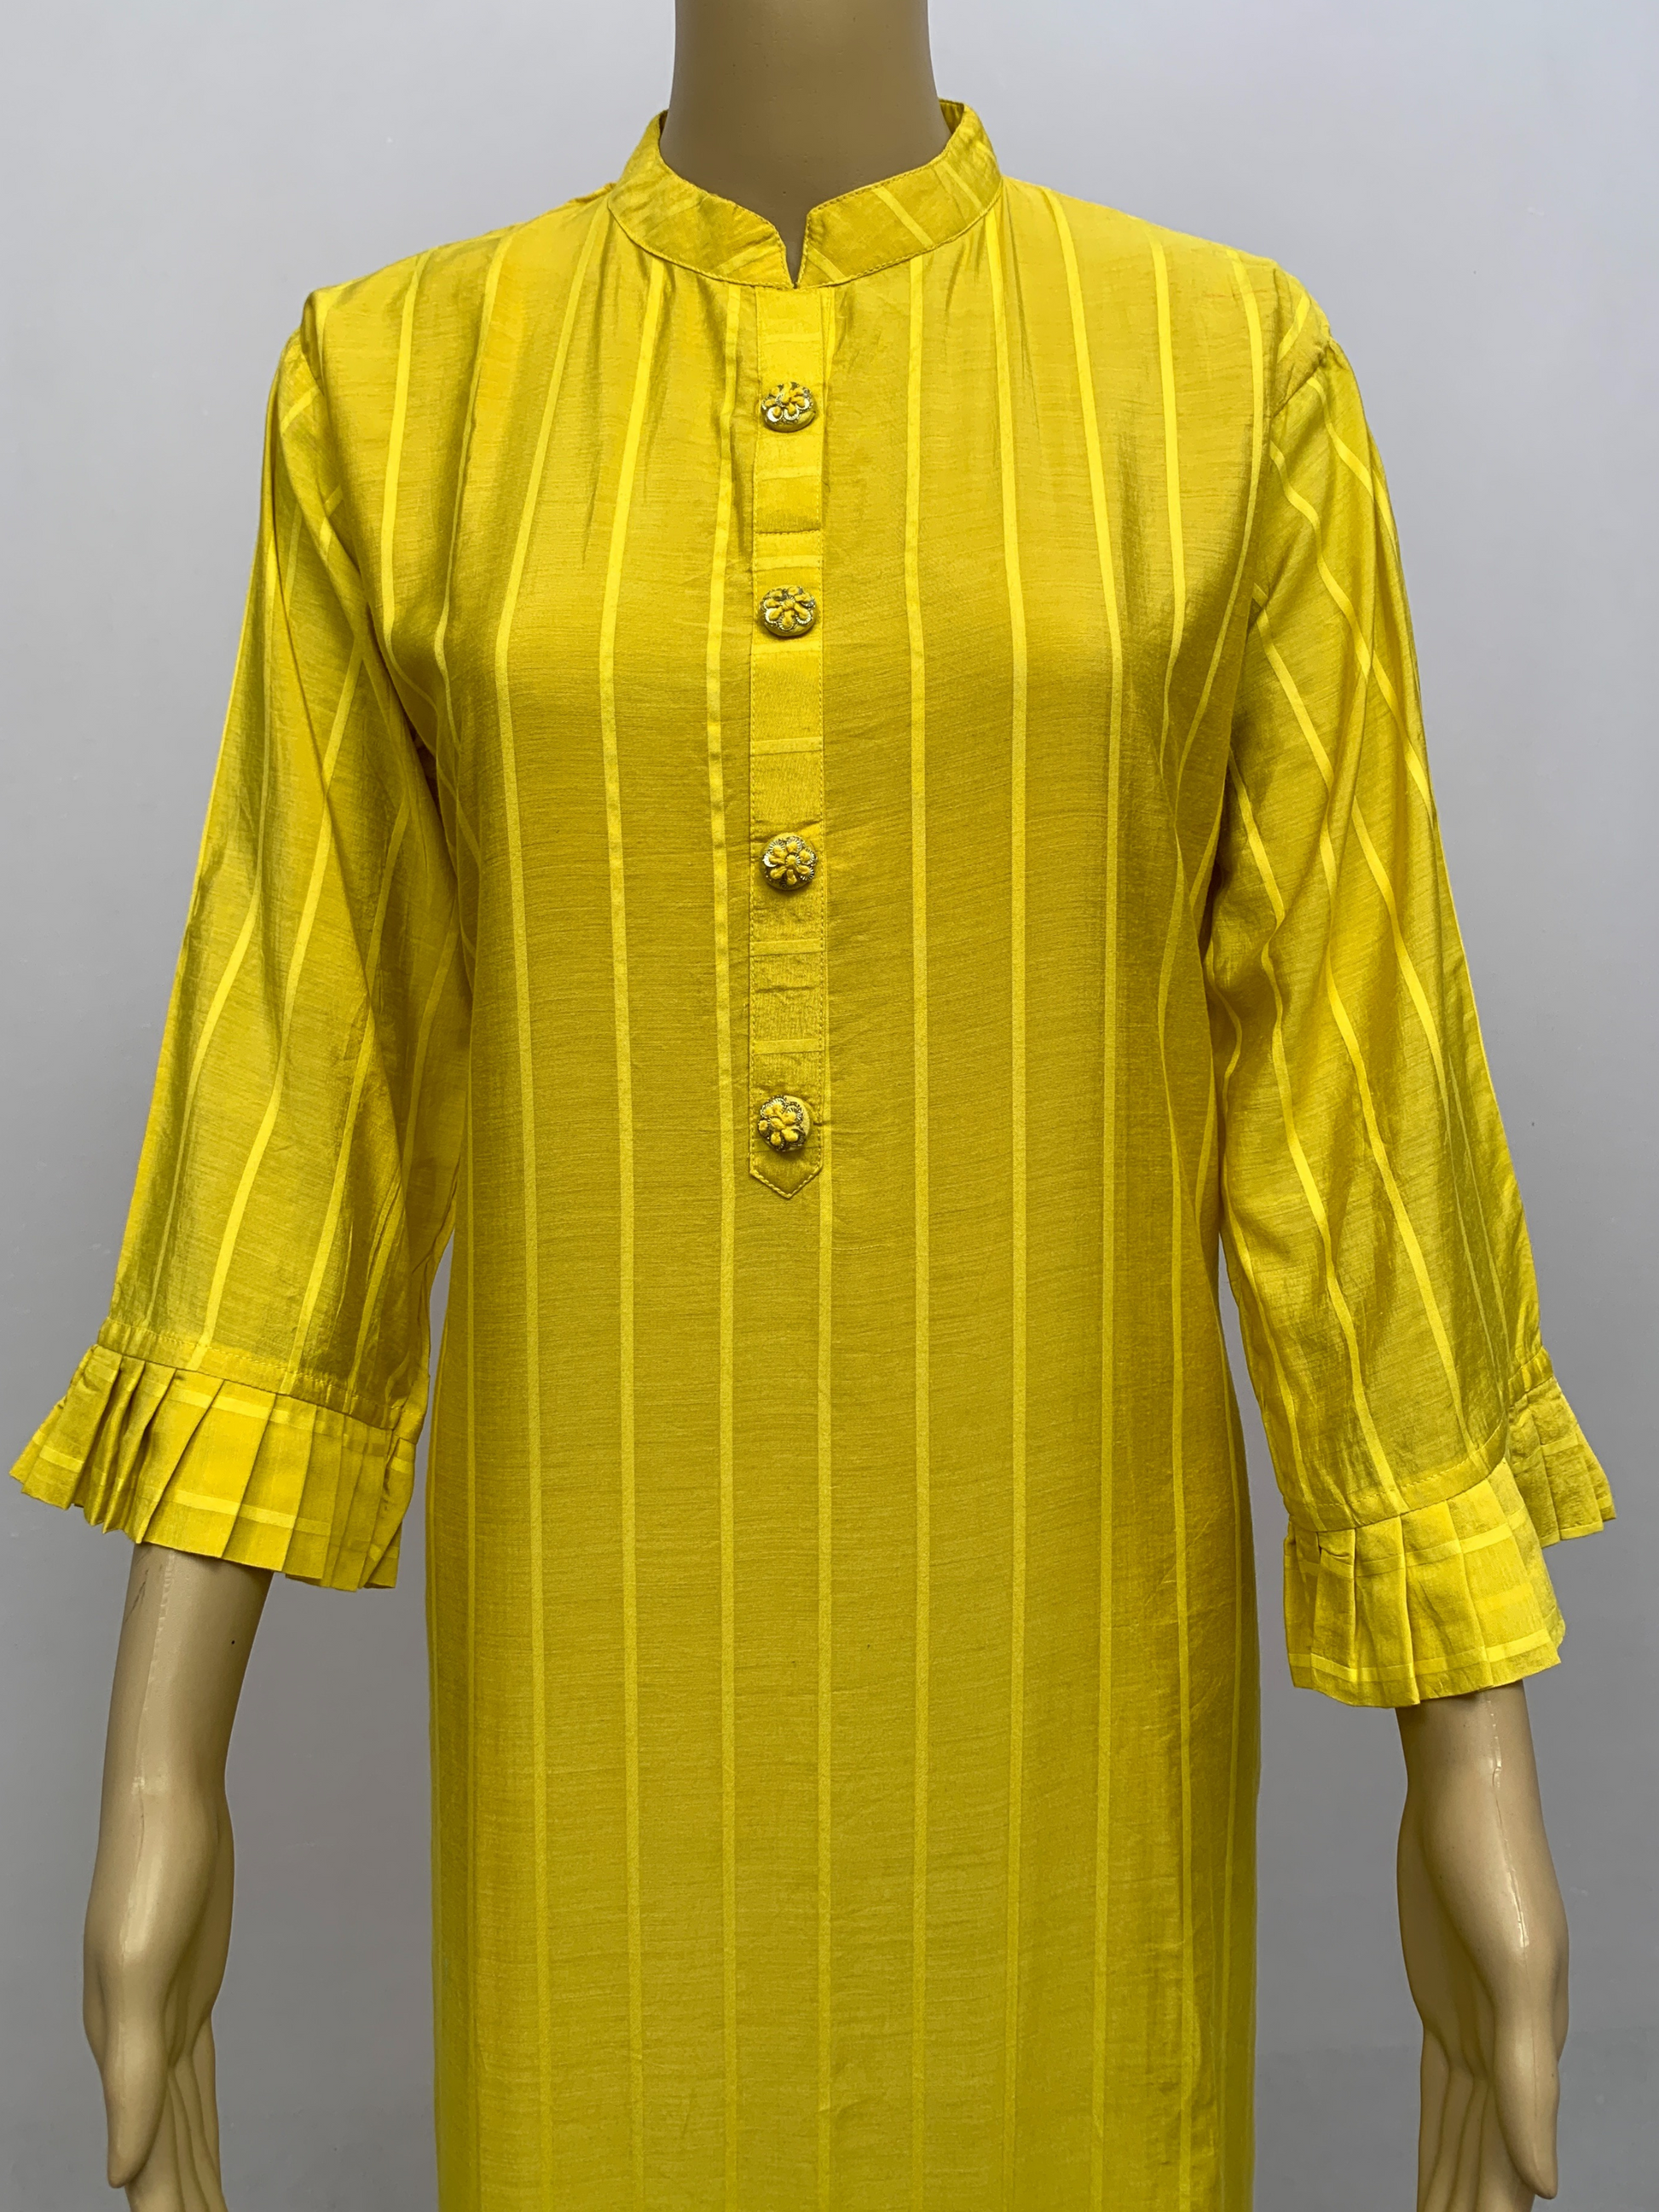 Yellow Handloom Cotton Kurthis Set with Designer Dupatta for women |  Stylish Kurthis & Kurtis Sets for Women |  Threyas 